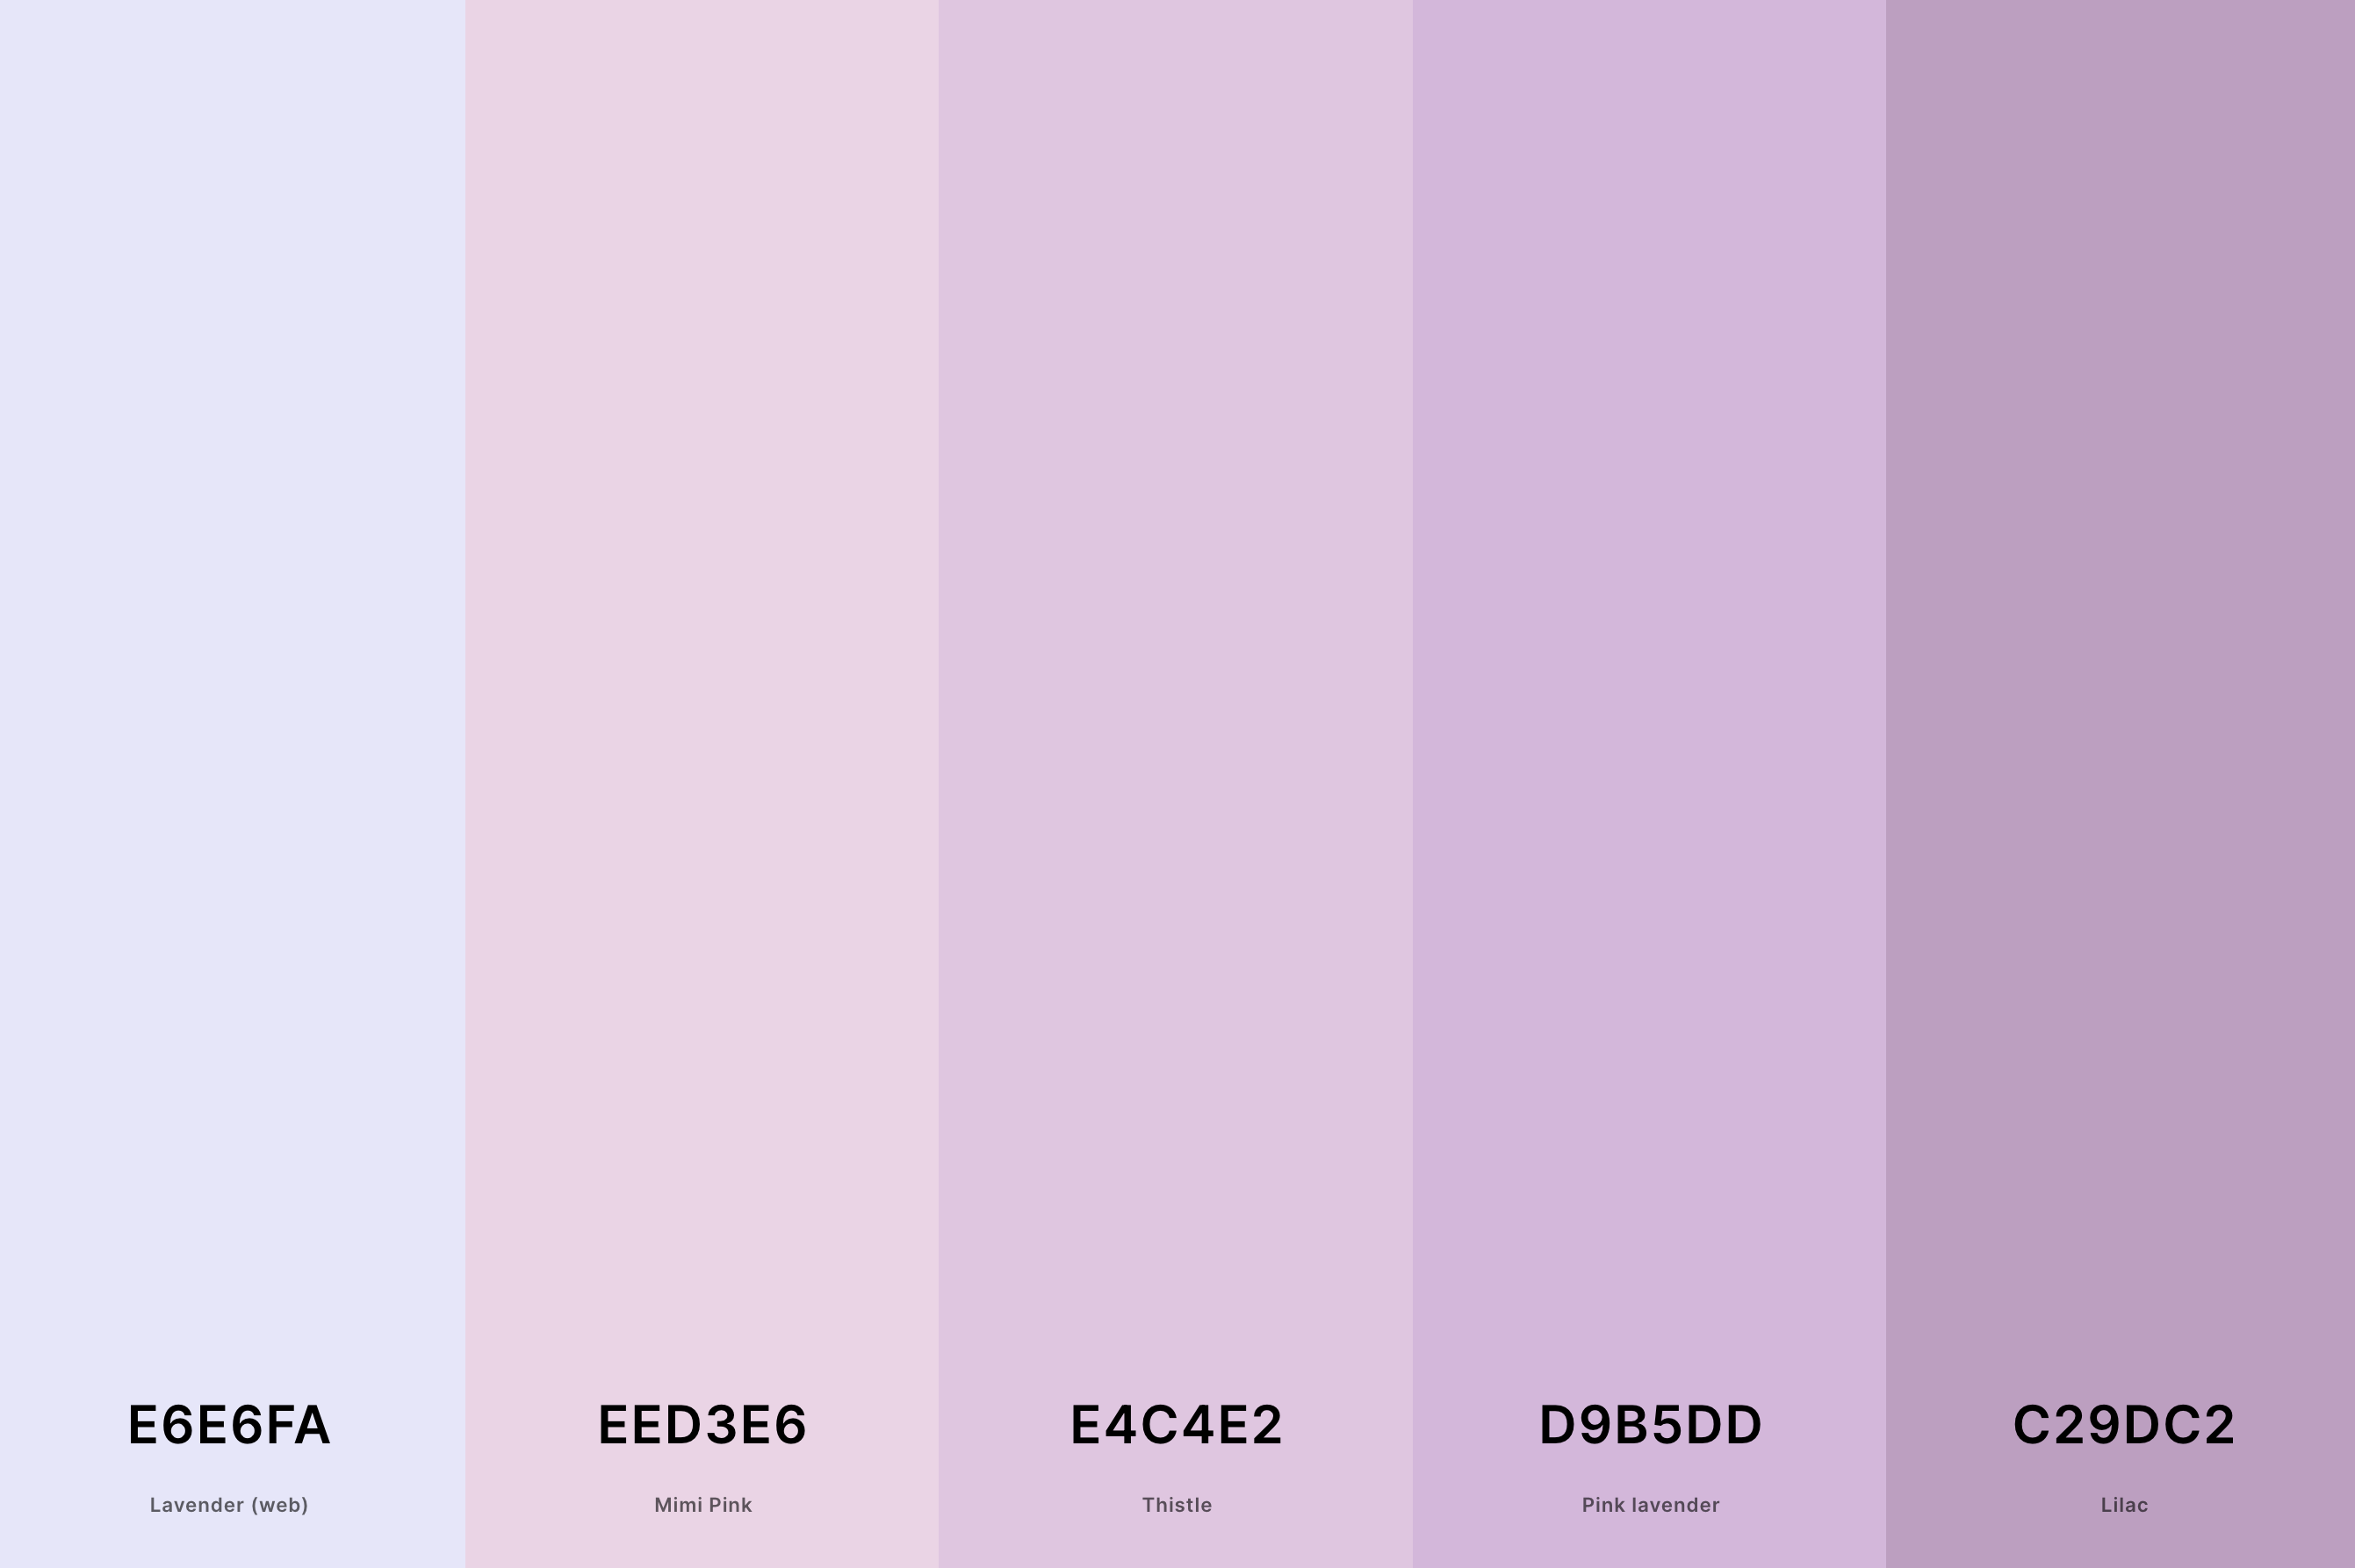 4. Lavender Lilac Color Palette Color Palette with Lavender (Web) (Hex #E6E6FA) + Mimi Pink (Hex #EED3E6) + Thistle (Hex #E4C4E2) + Pink Lavender (Hex #D9B5DD) + Lilac (Hex #C29DC2) Color Palette with Hex Codes